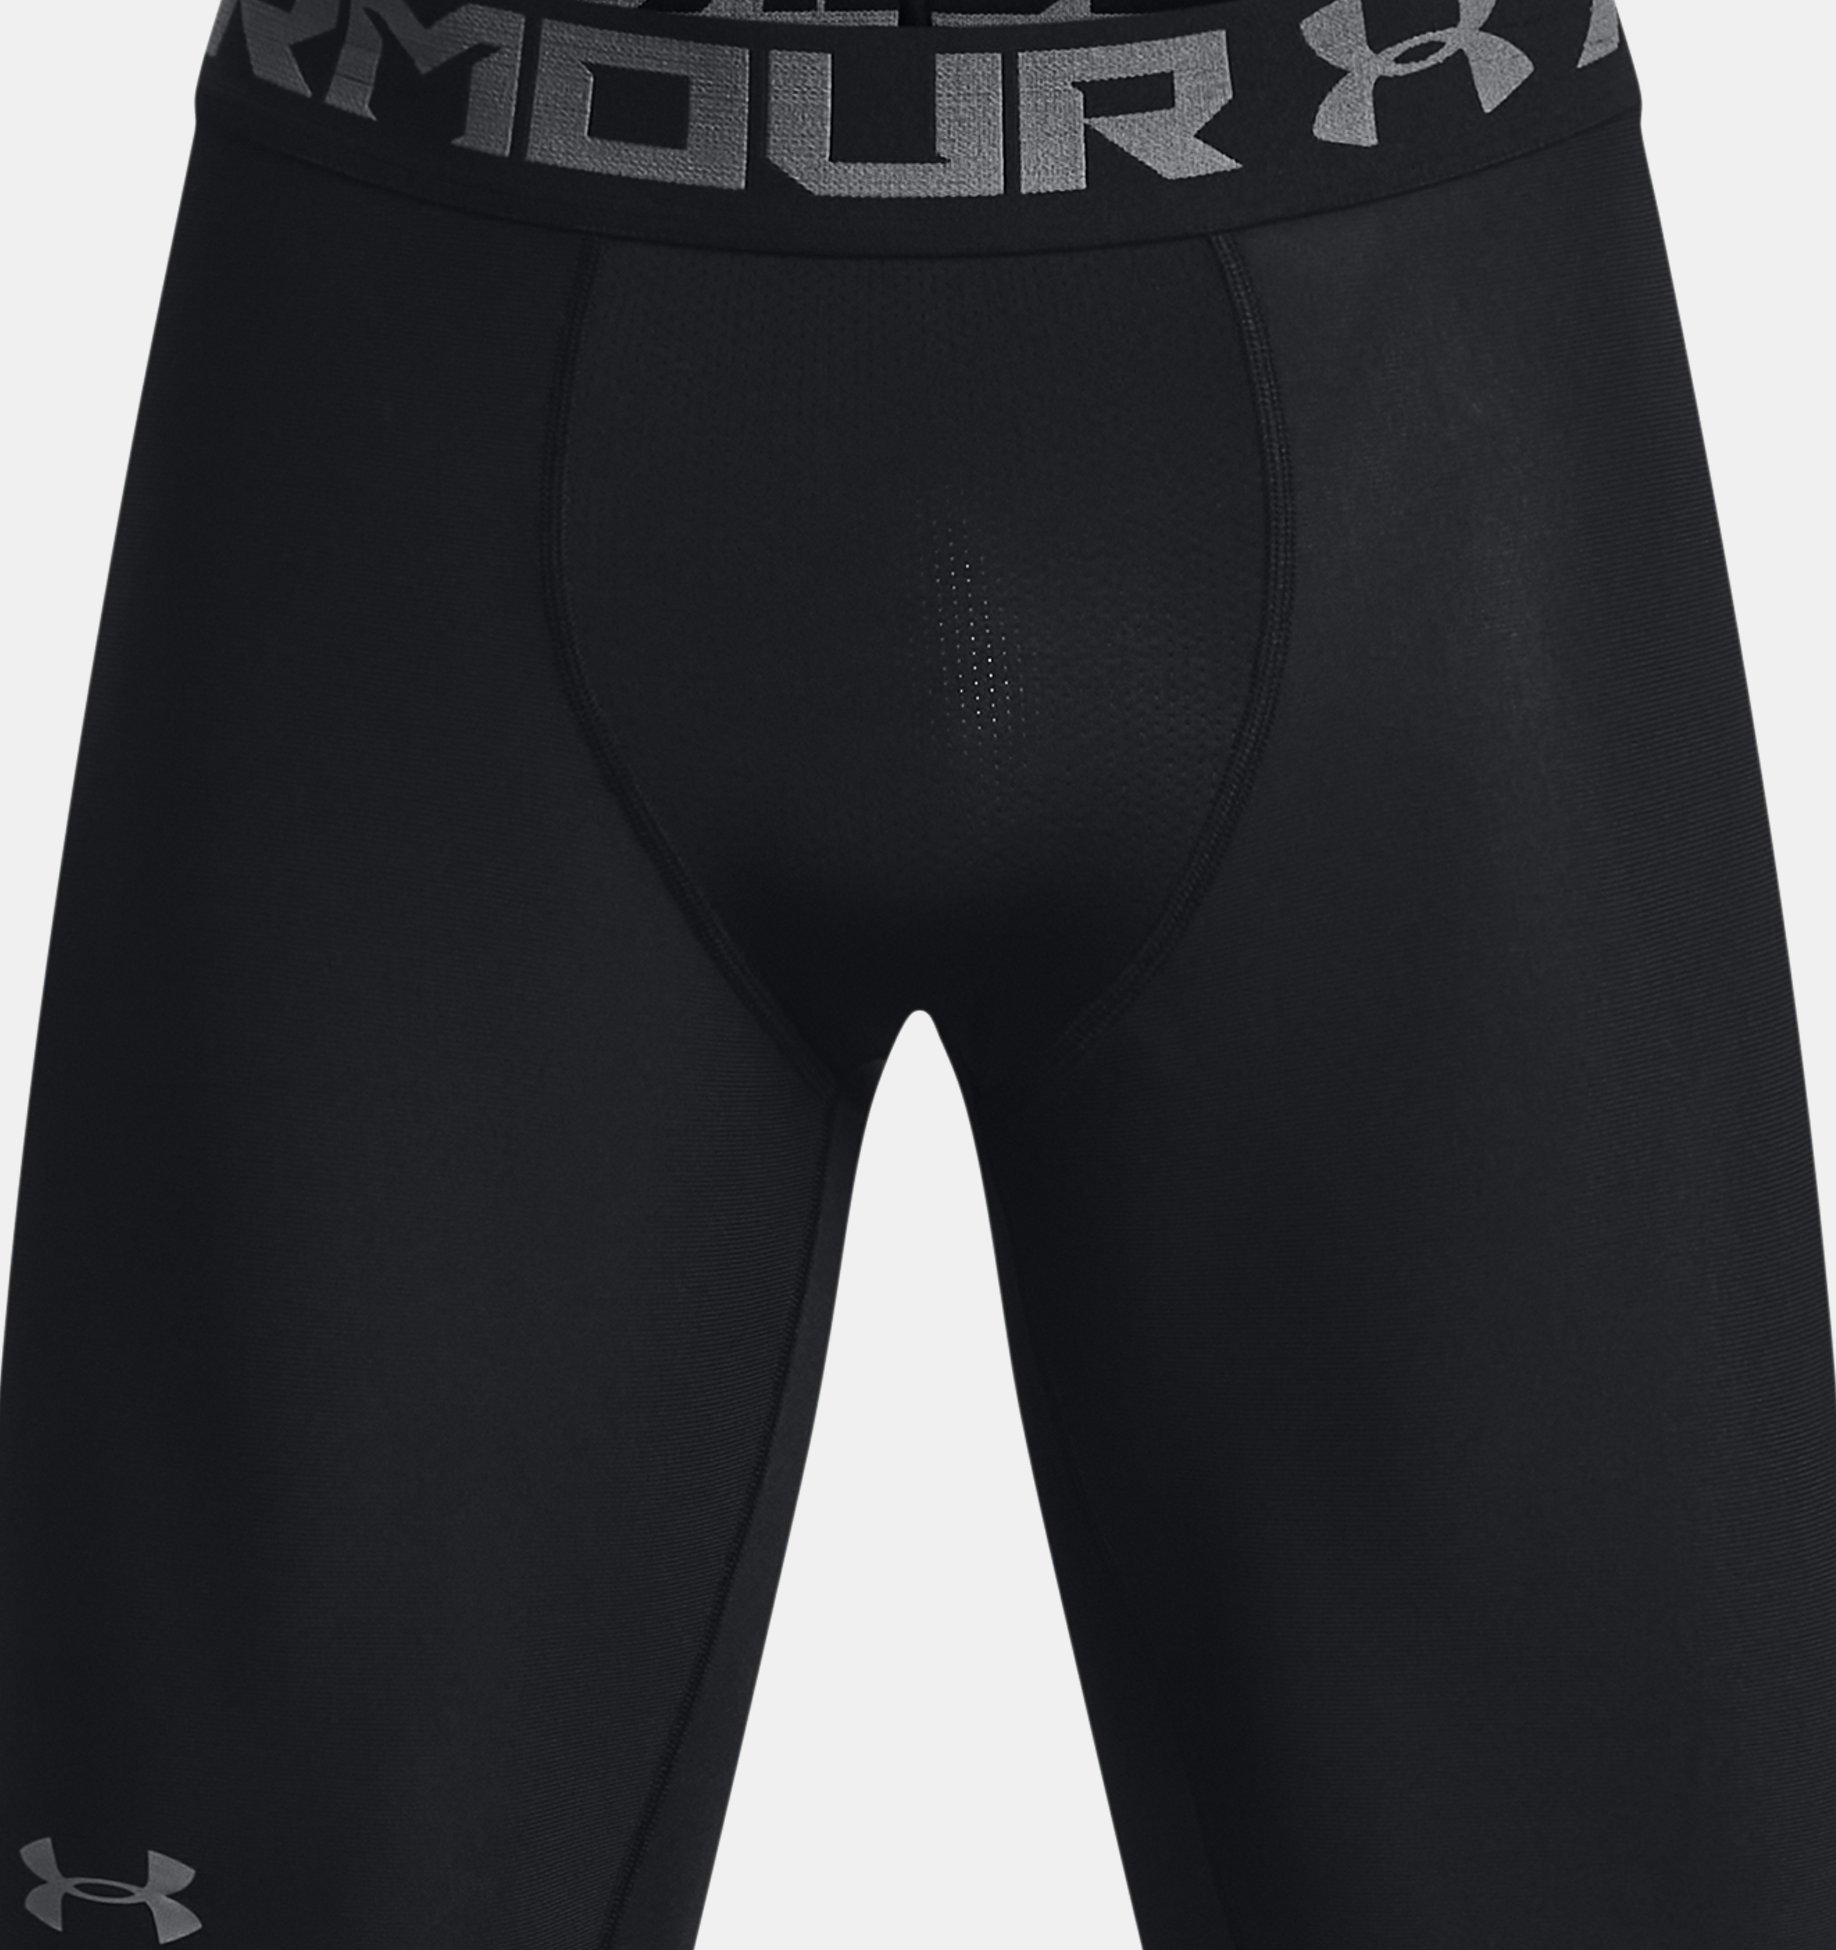 granero bolita Joven Men's HeatGear® Armour Long Compression Shorts | Under Armour